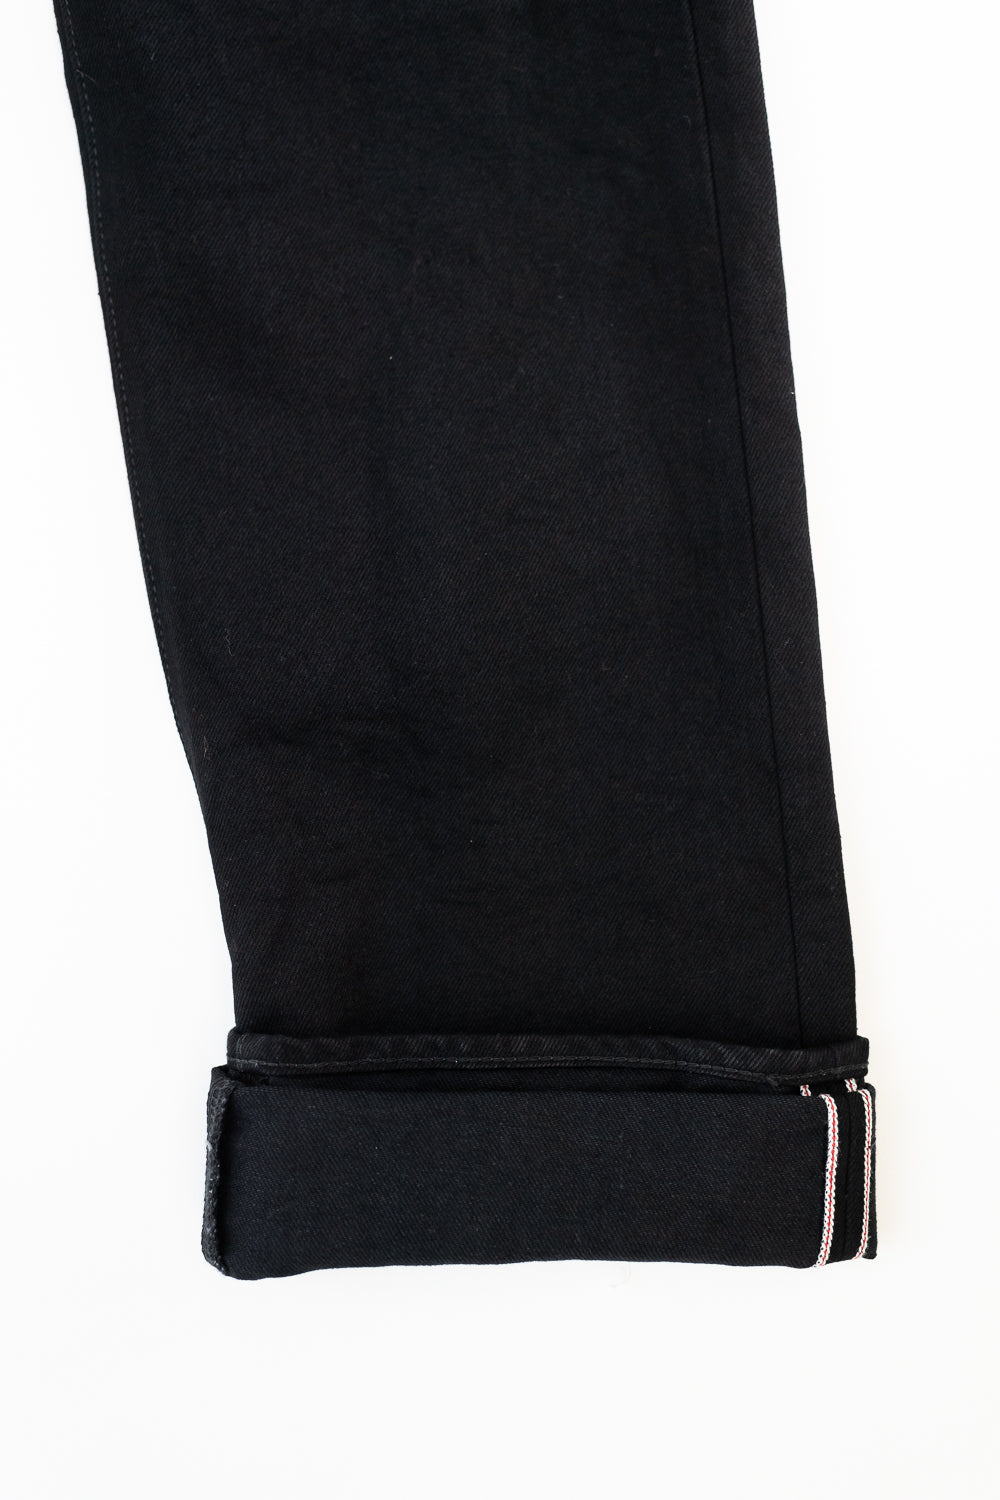 IH-634S-142bb - 14oz Selvedge Denim Straight Cut Jeans - Black/Black